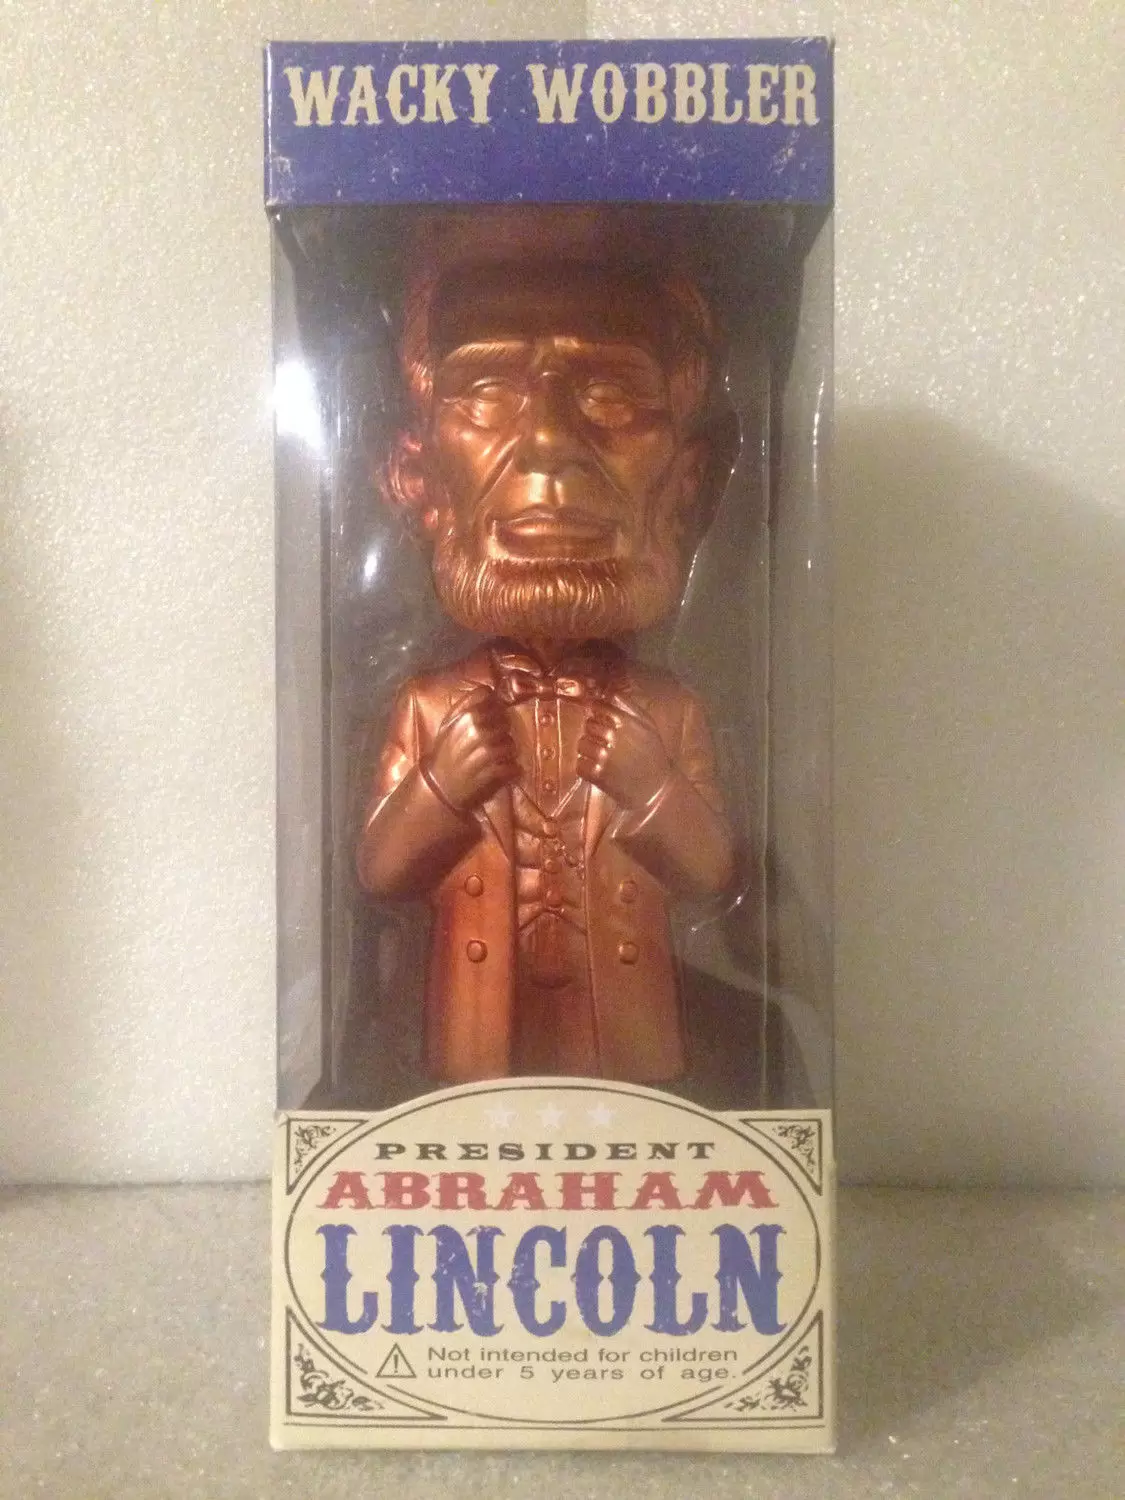 Wacky Wobbler Celebrities - President Abraham Lincoln Chase